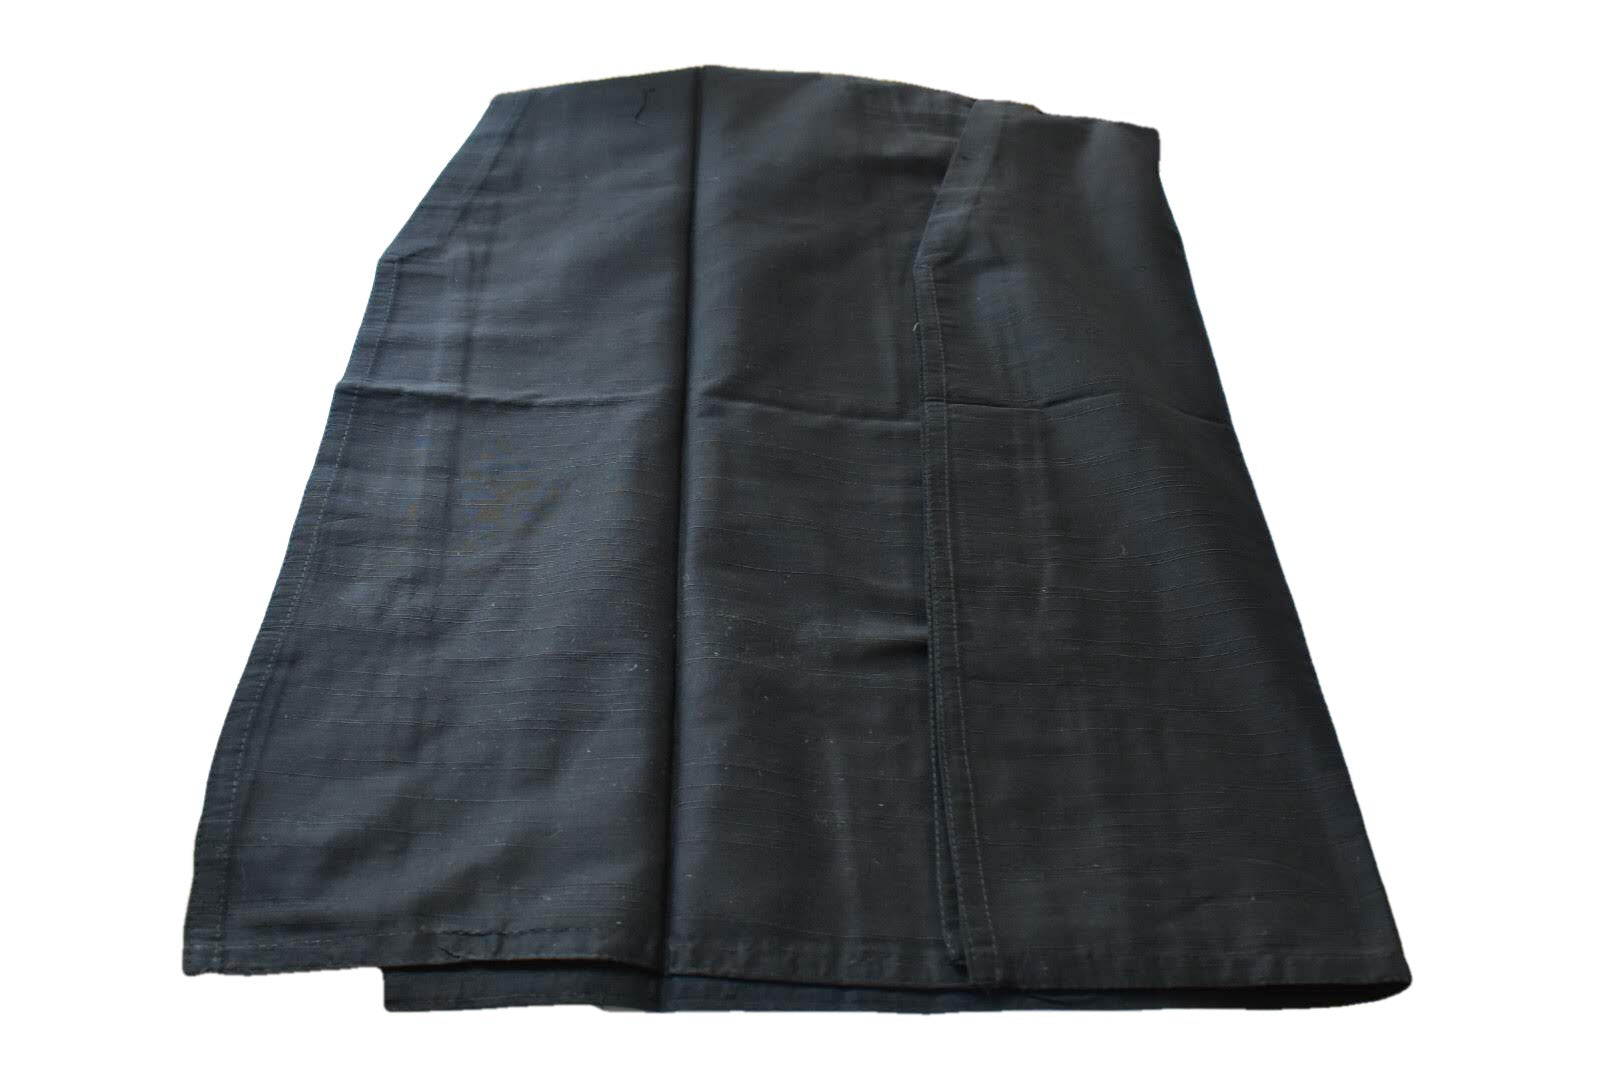 Black Color - Raw Silk Kurti Size Small/Medium - 30/32 Junior size. Big Girls size - 18 plus - Good Deal